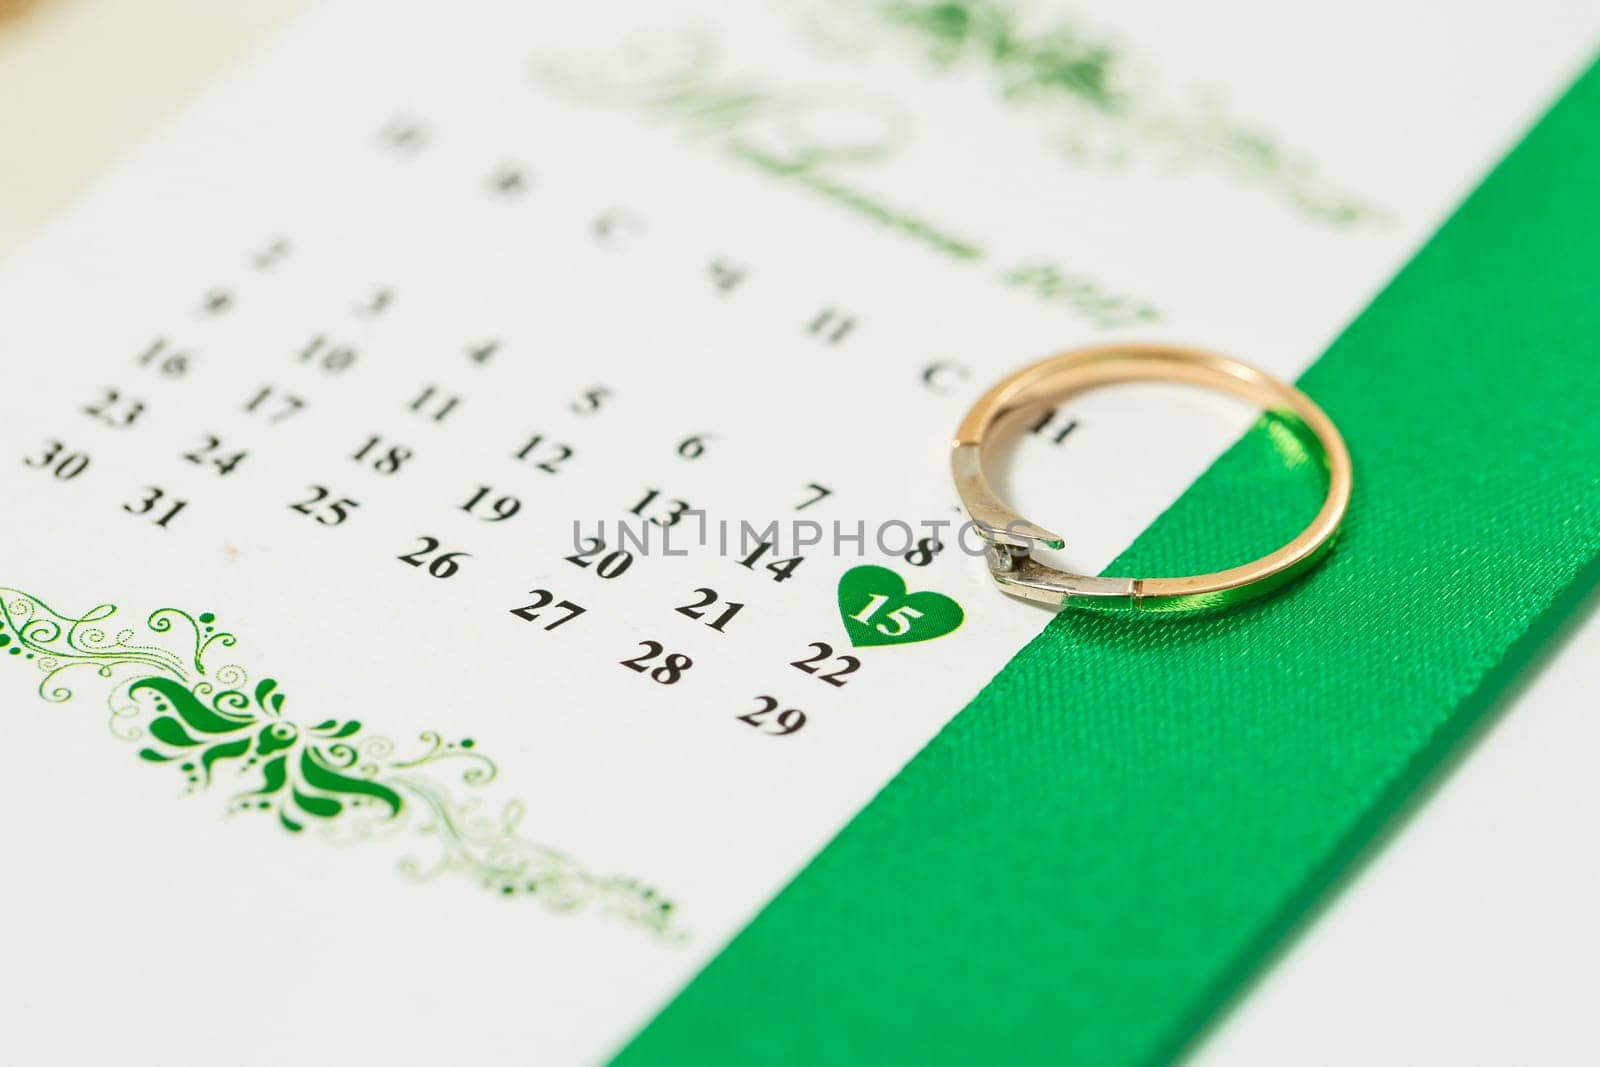 Golden wedding rings for newlyweds on their wedding day by Dmitrytph